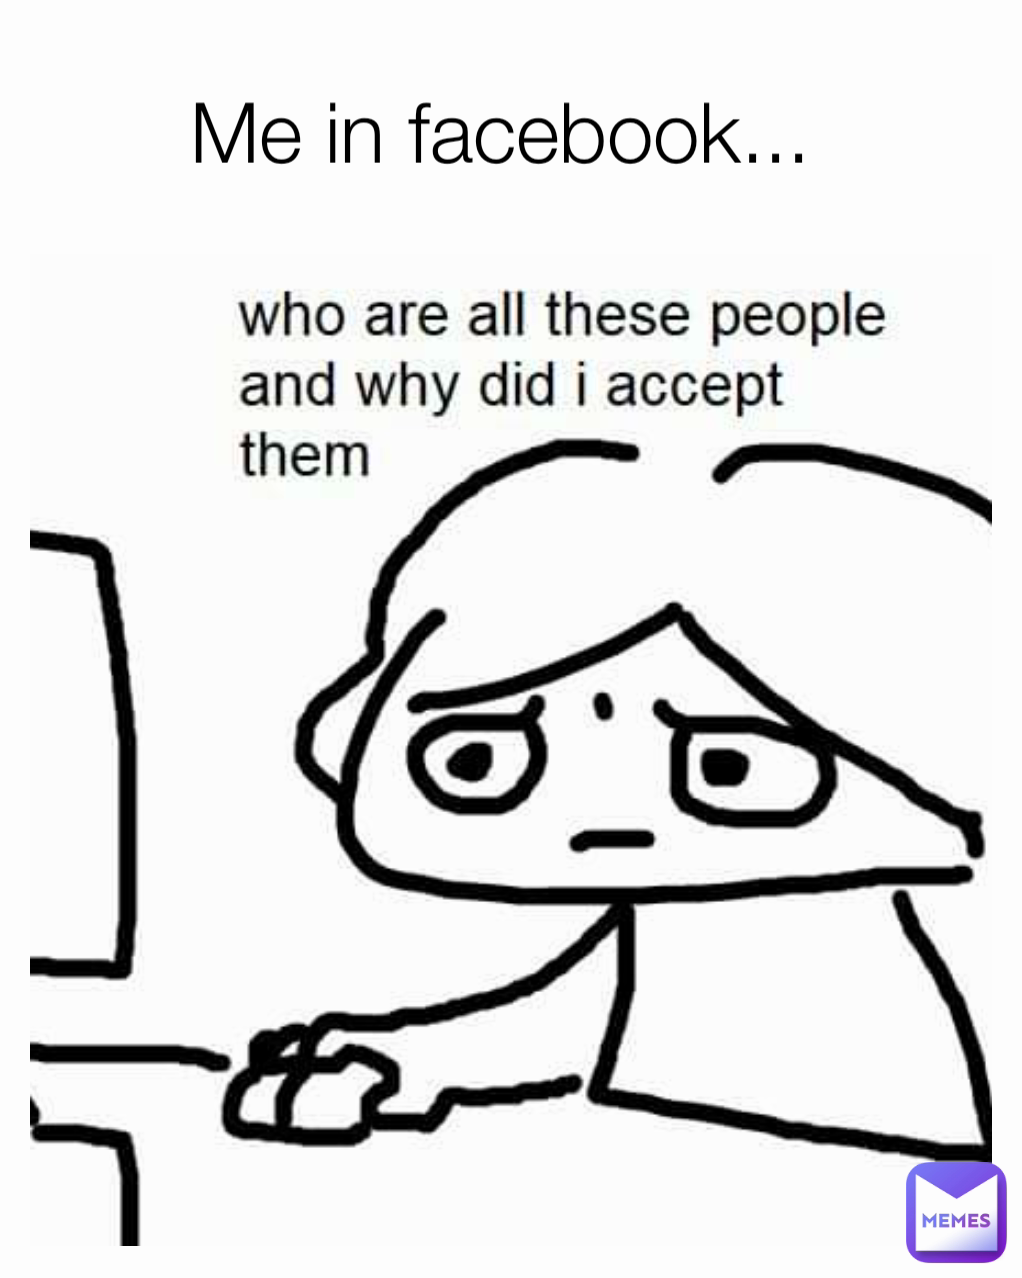 Me in facebook... 